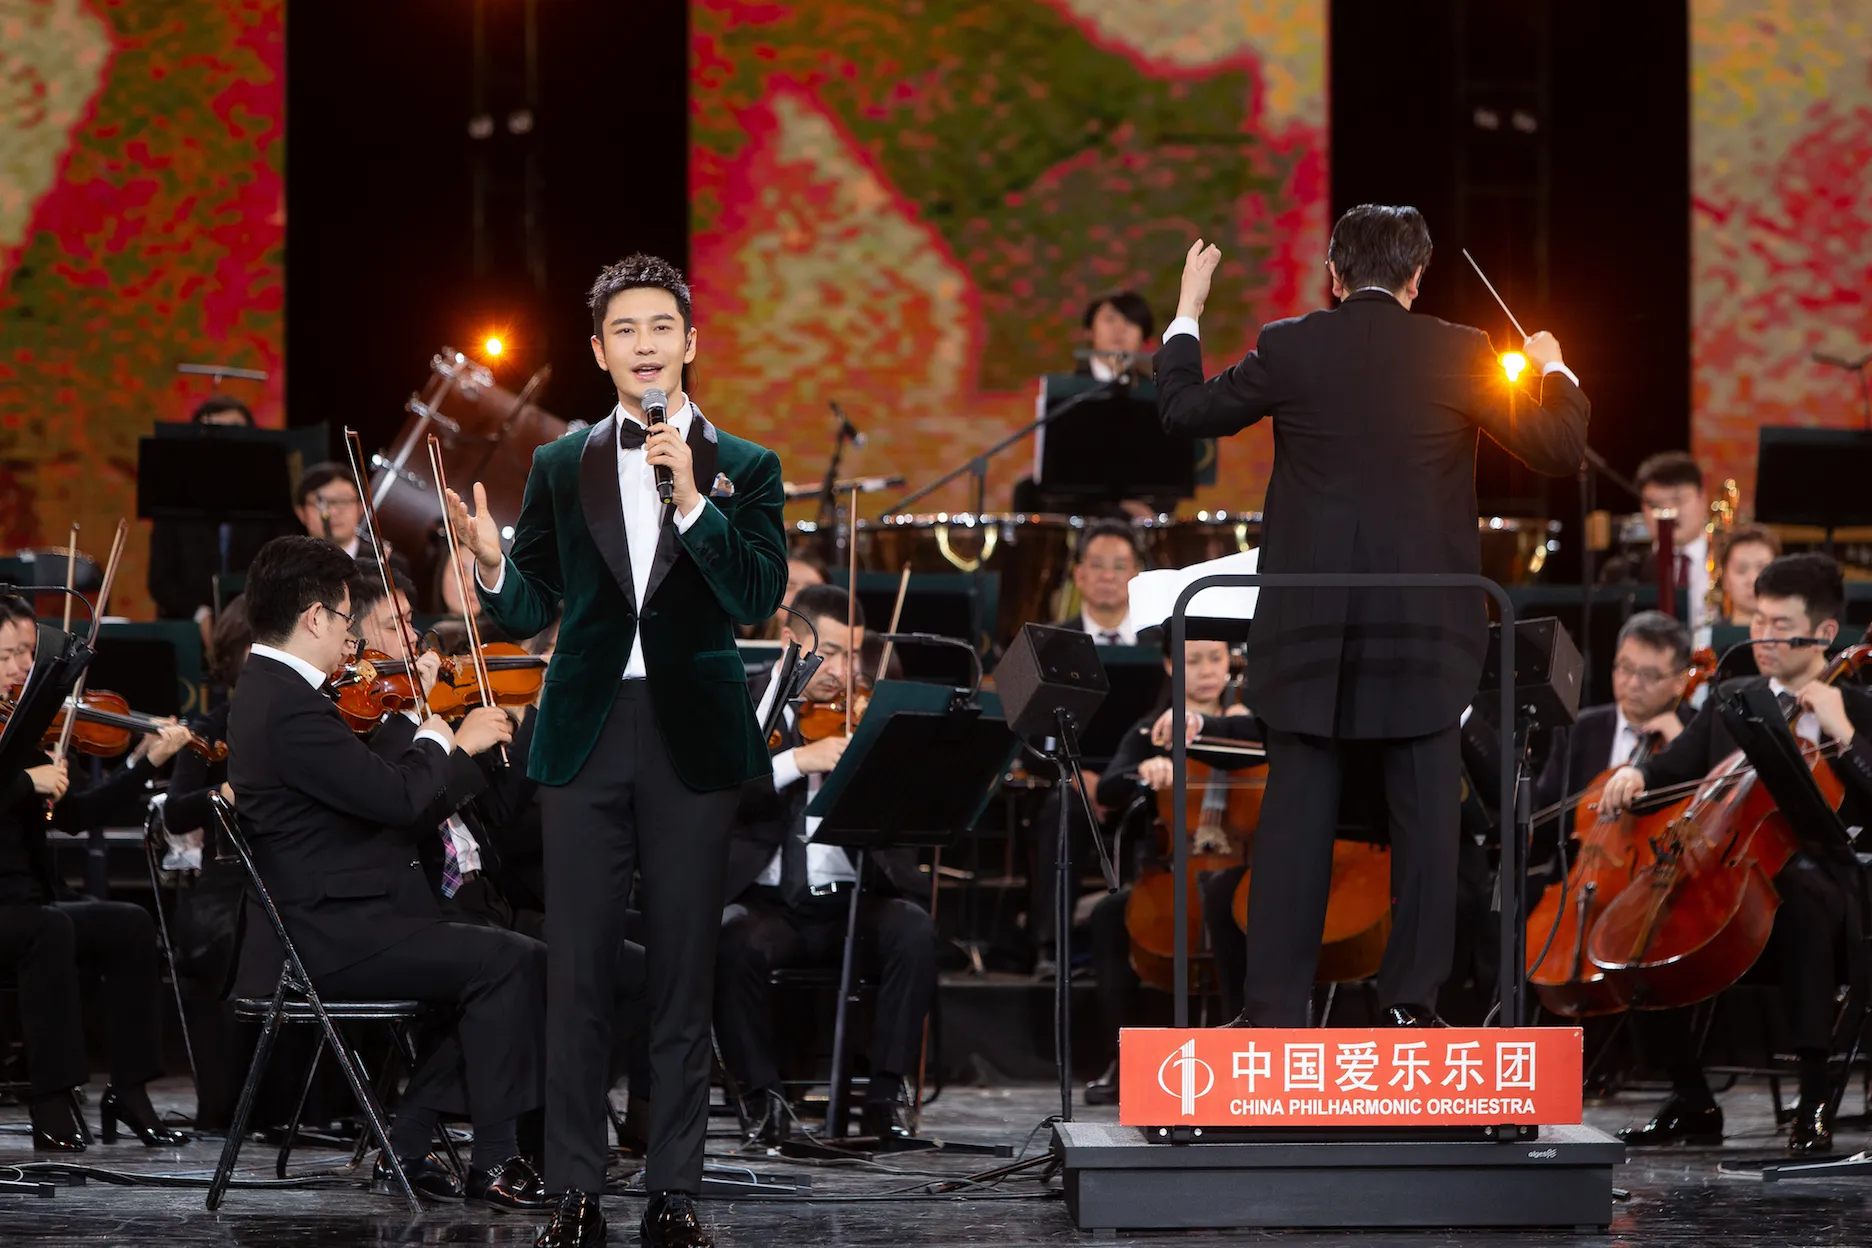  Xiaoming Huang 参加起航2019中国音乐盛典#1.JPG